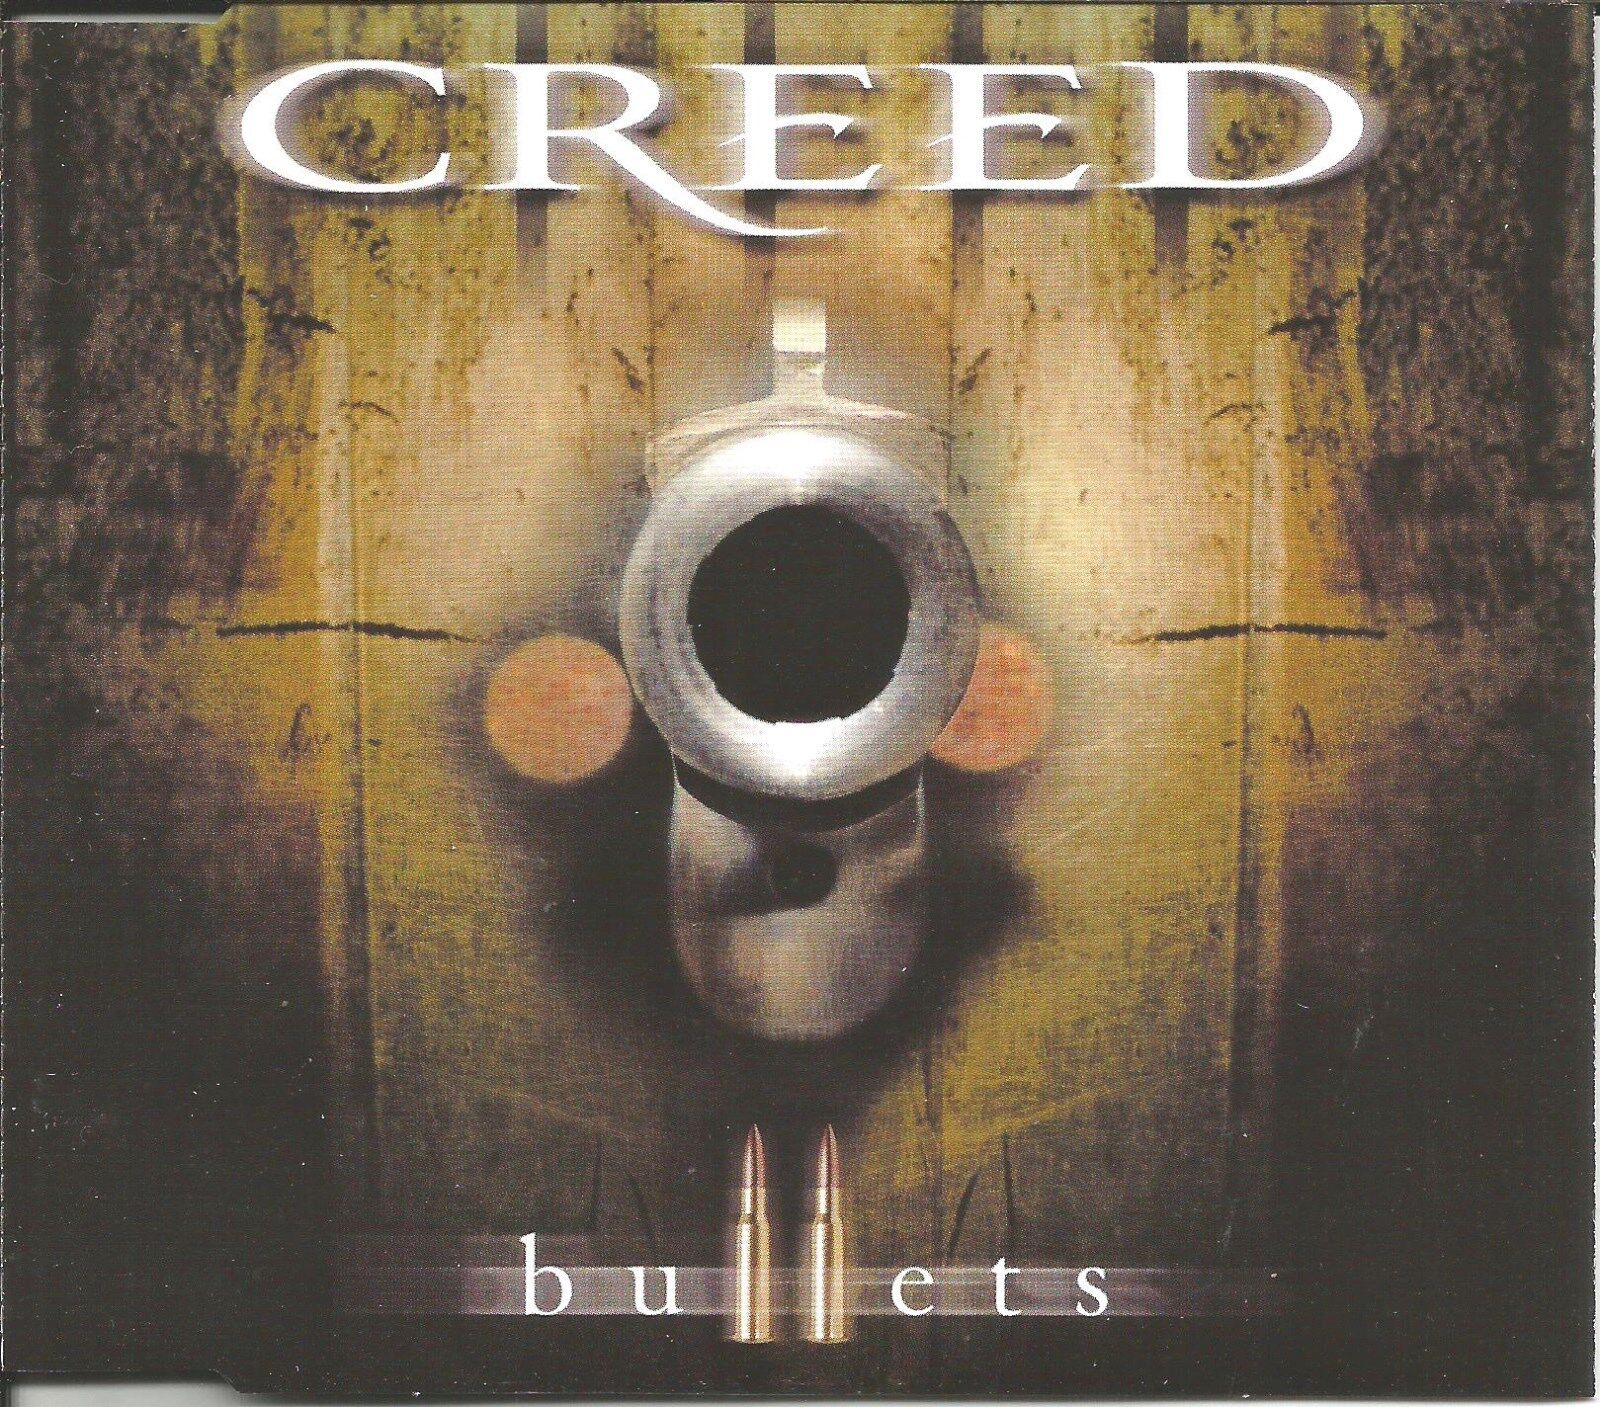 Scott Stapp CREED Bullets w/ UNRELEASED TRK & VIDEO Europe CD single USA Seller